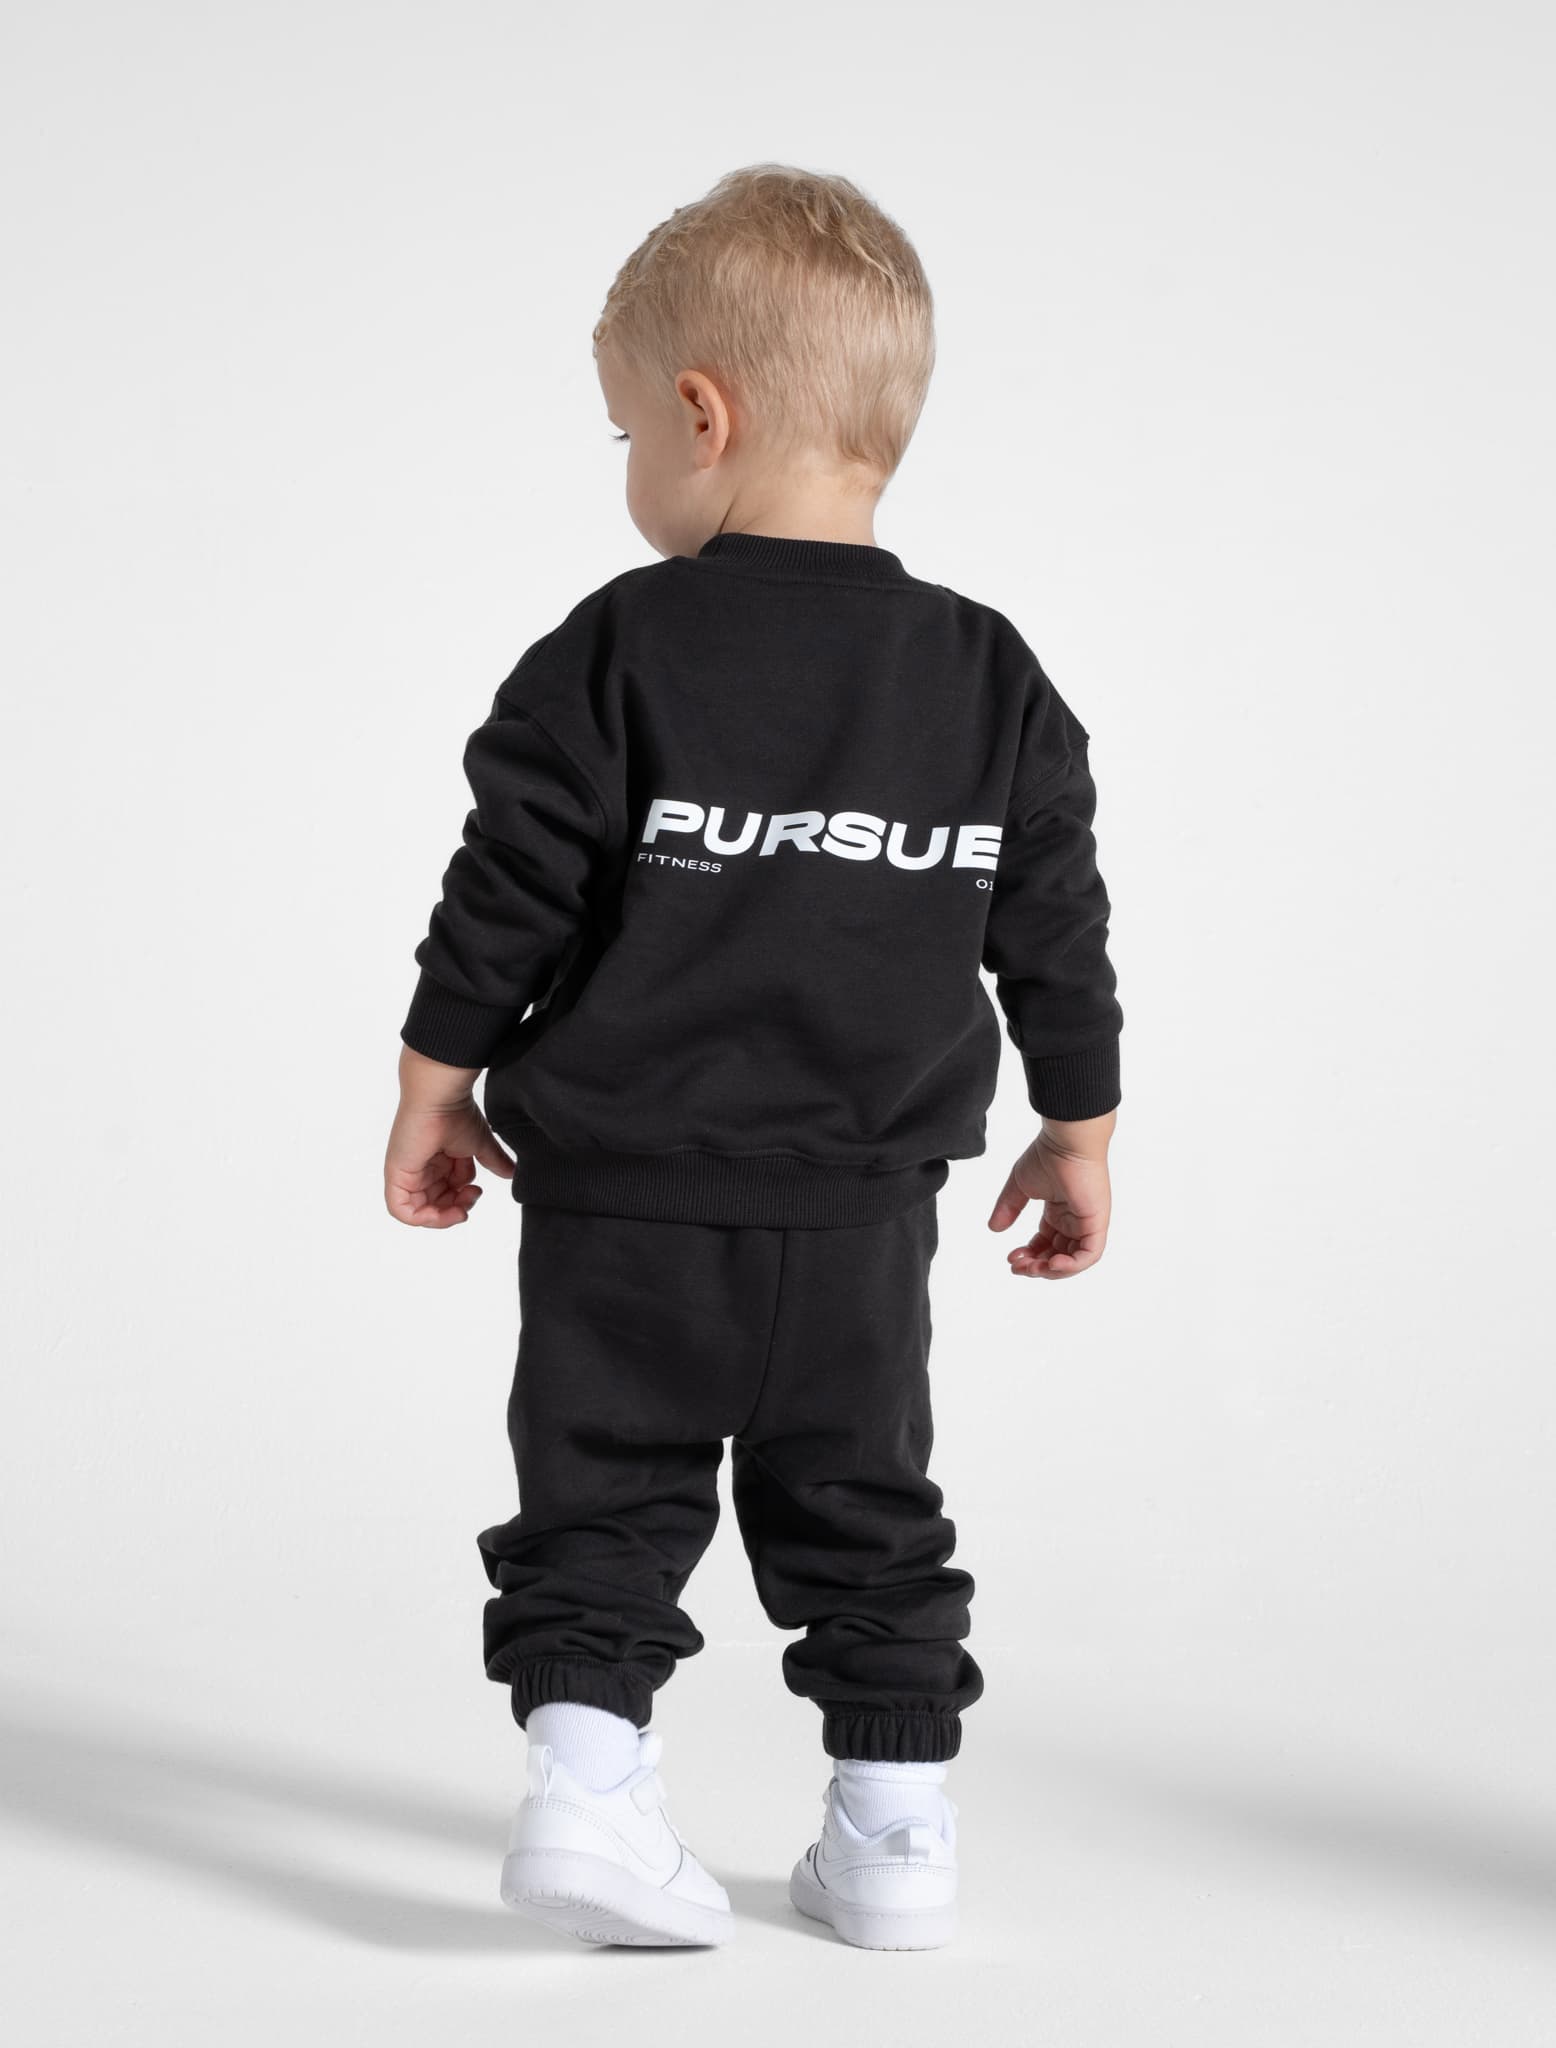 Kids Sweater / Black Pursue Fitness 1